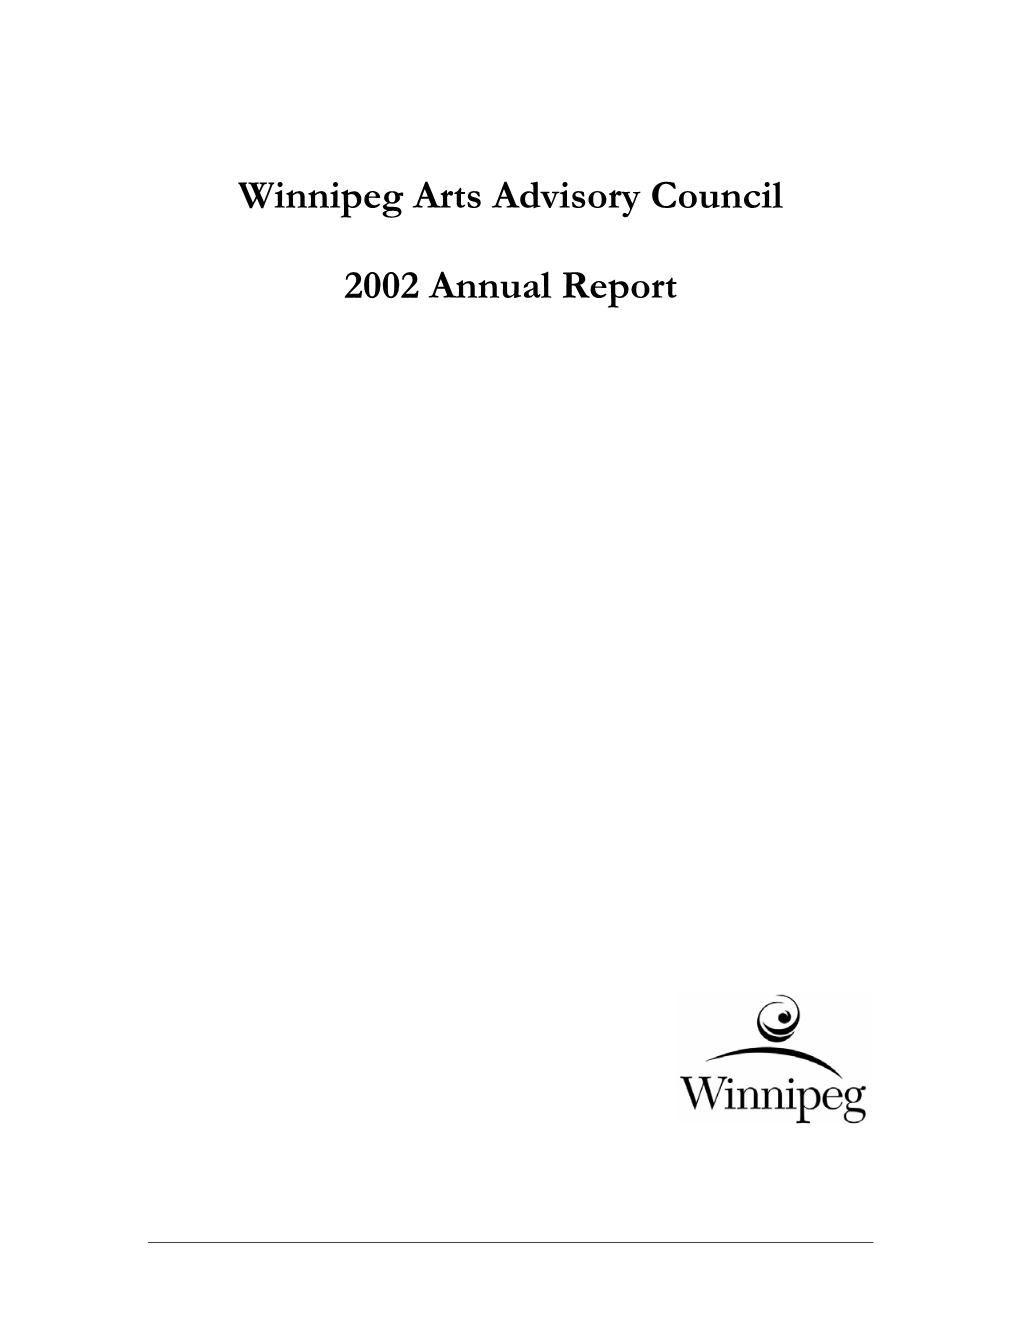 Winnipeg Arts Advisory Council 2002 Annual Report 1